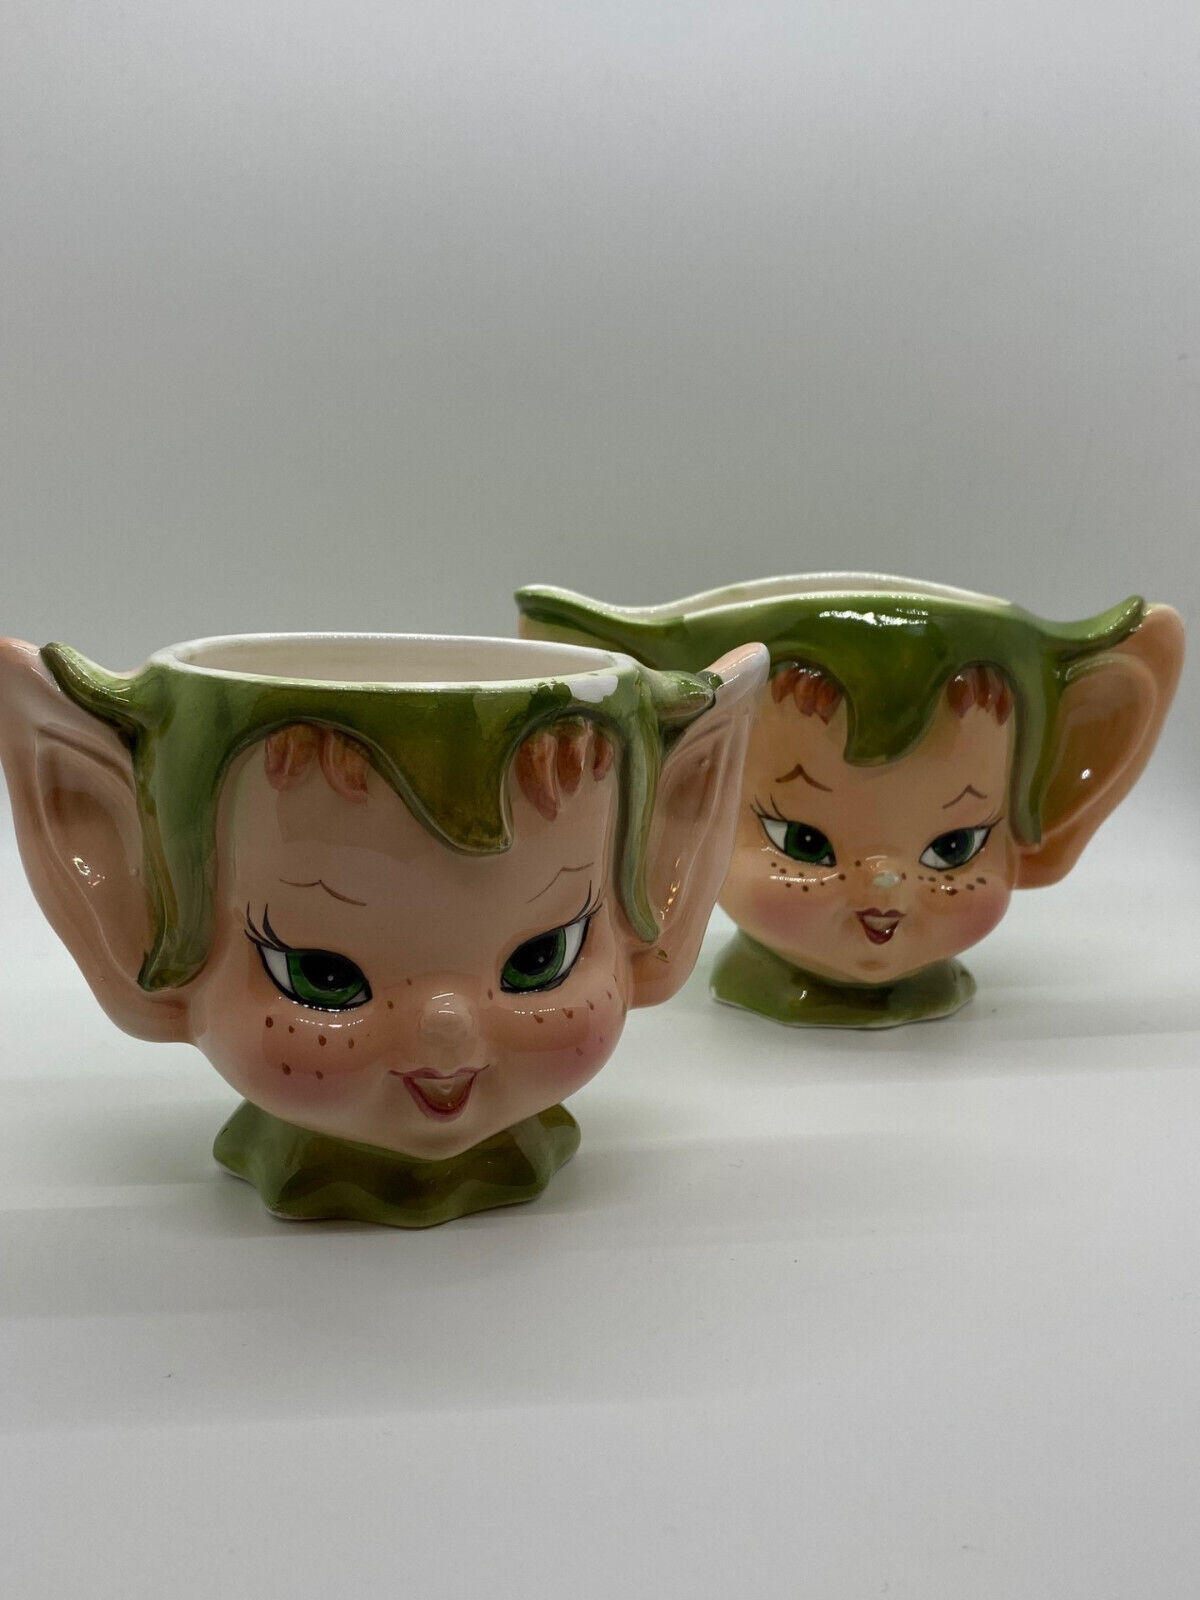 Vintage Lefton Green Pixie Elf Creamer and Sugar Bowl 3970 Japan